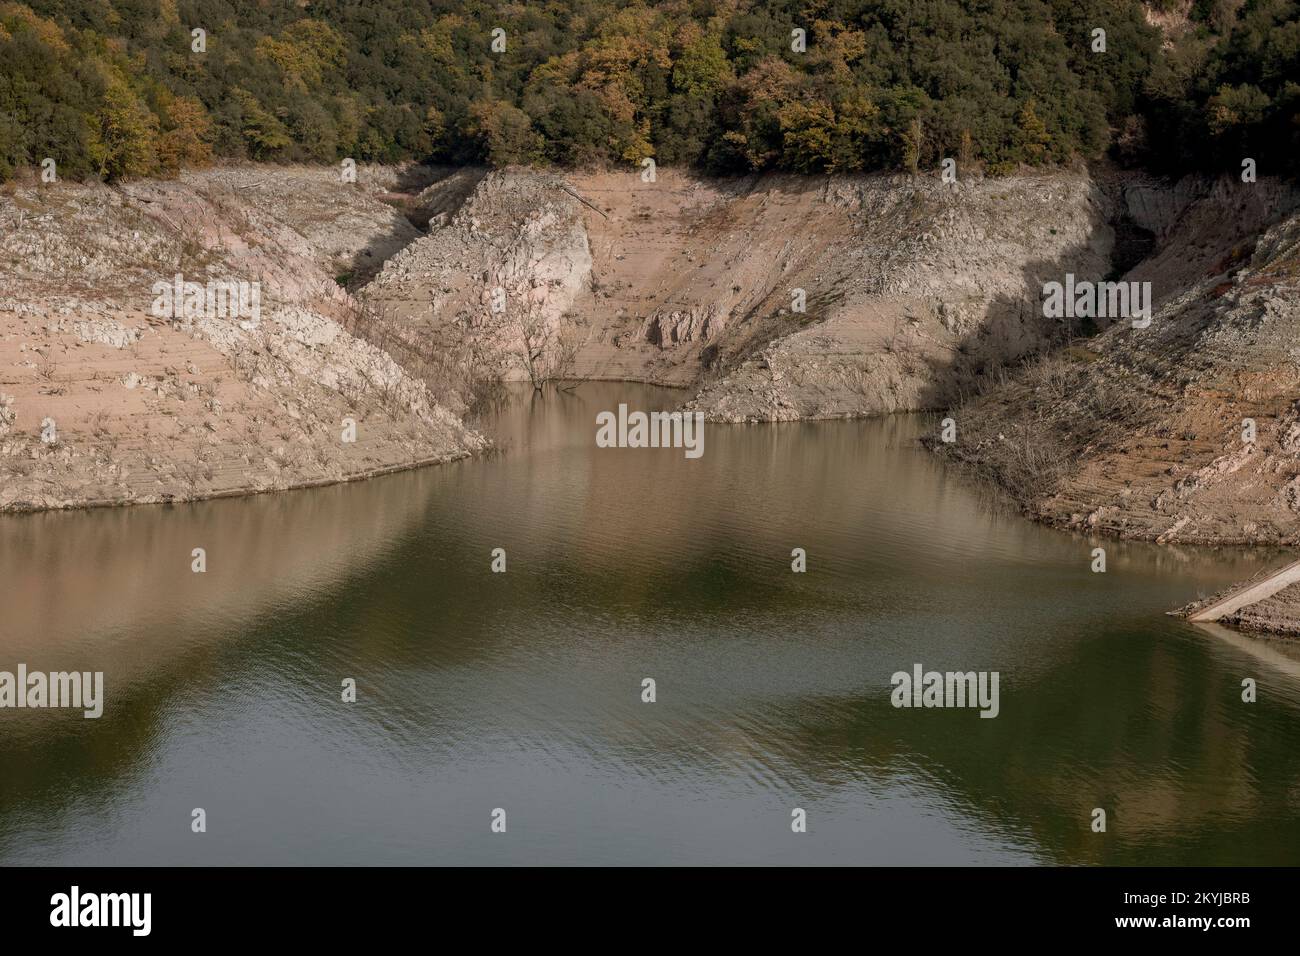 Sau reservoir at 30% of its water capacity.  Views of the scarcity of water in the Sau reservoir in Vilanova de Sau, Catalonia, Spain, on November 29, 2022.  © Joan Gosa 2022/Alamy Stock Photo